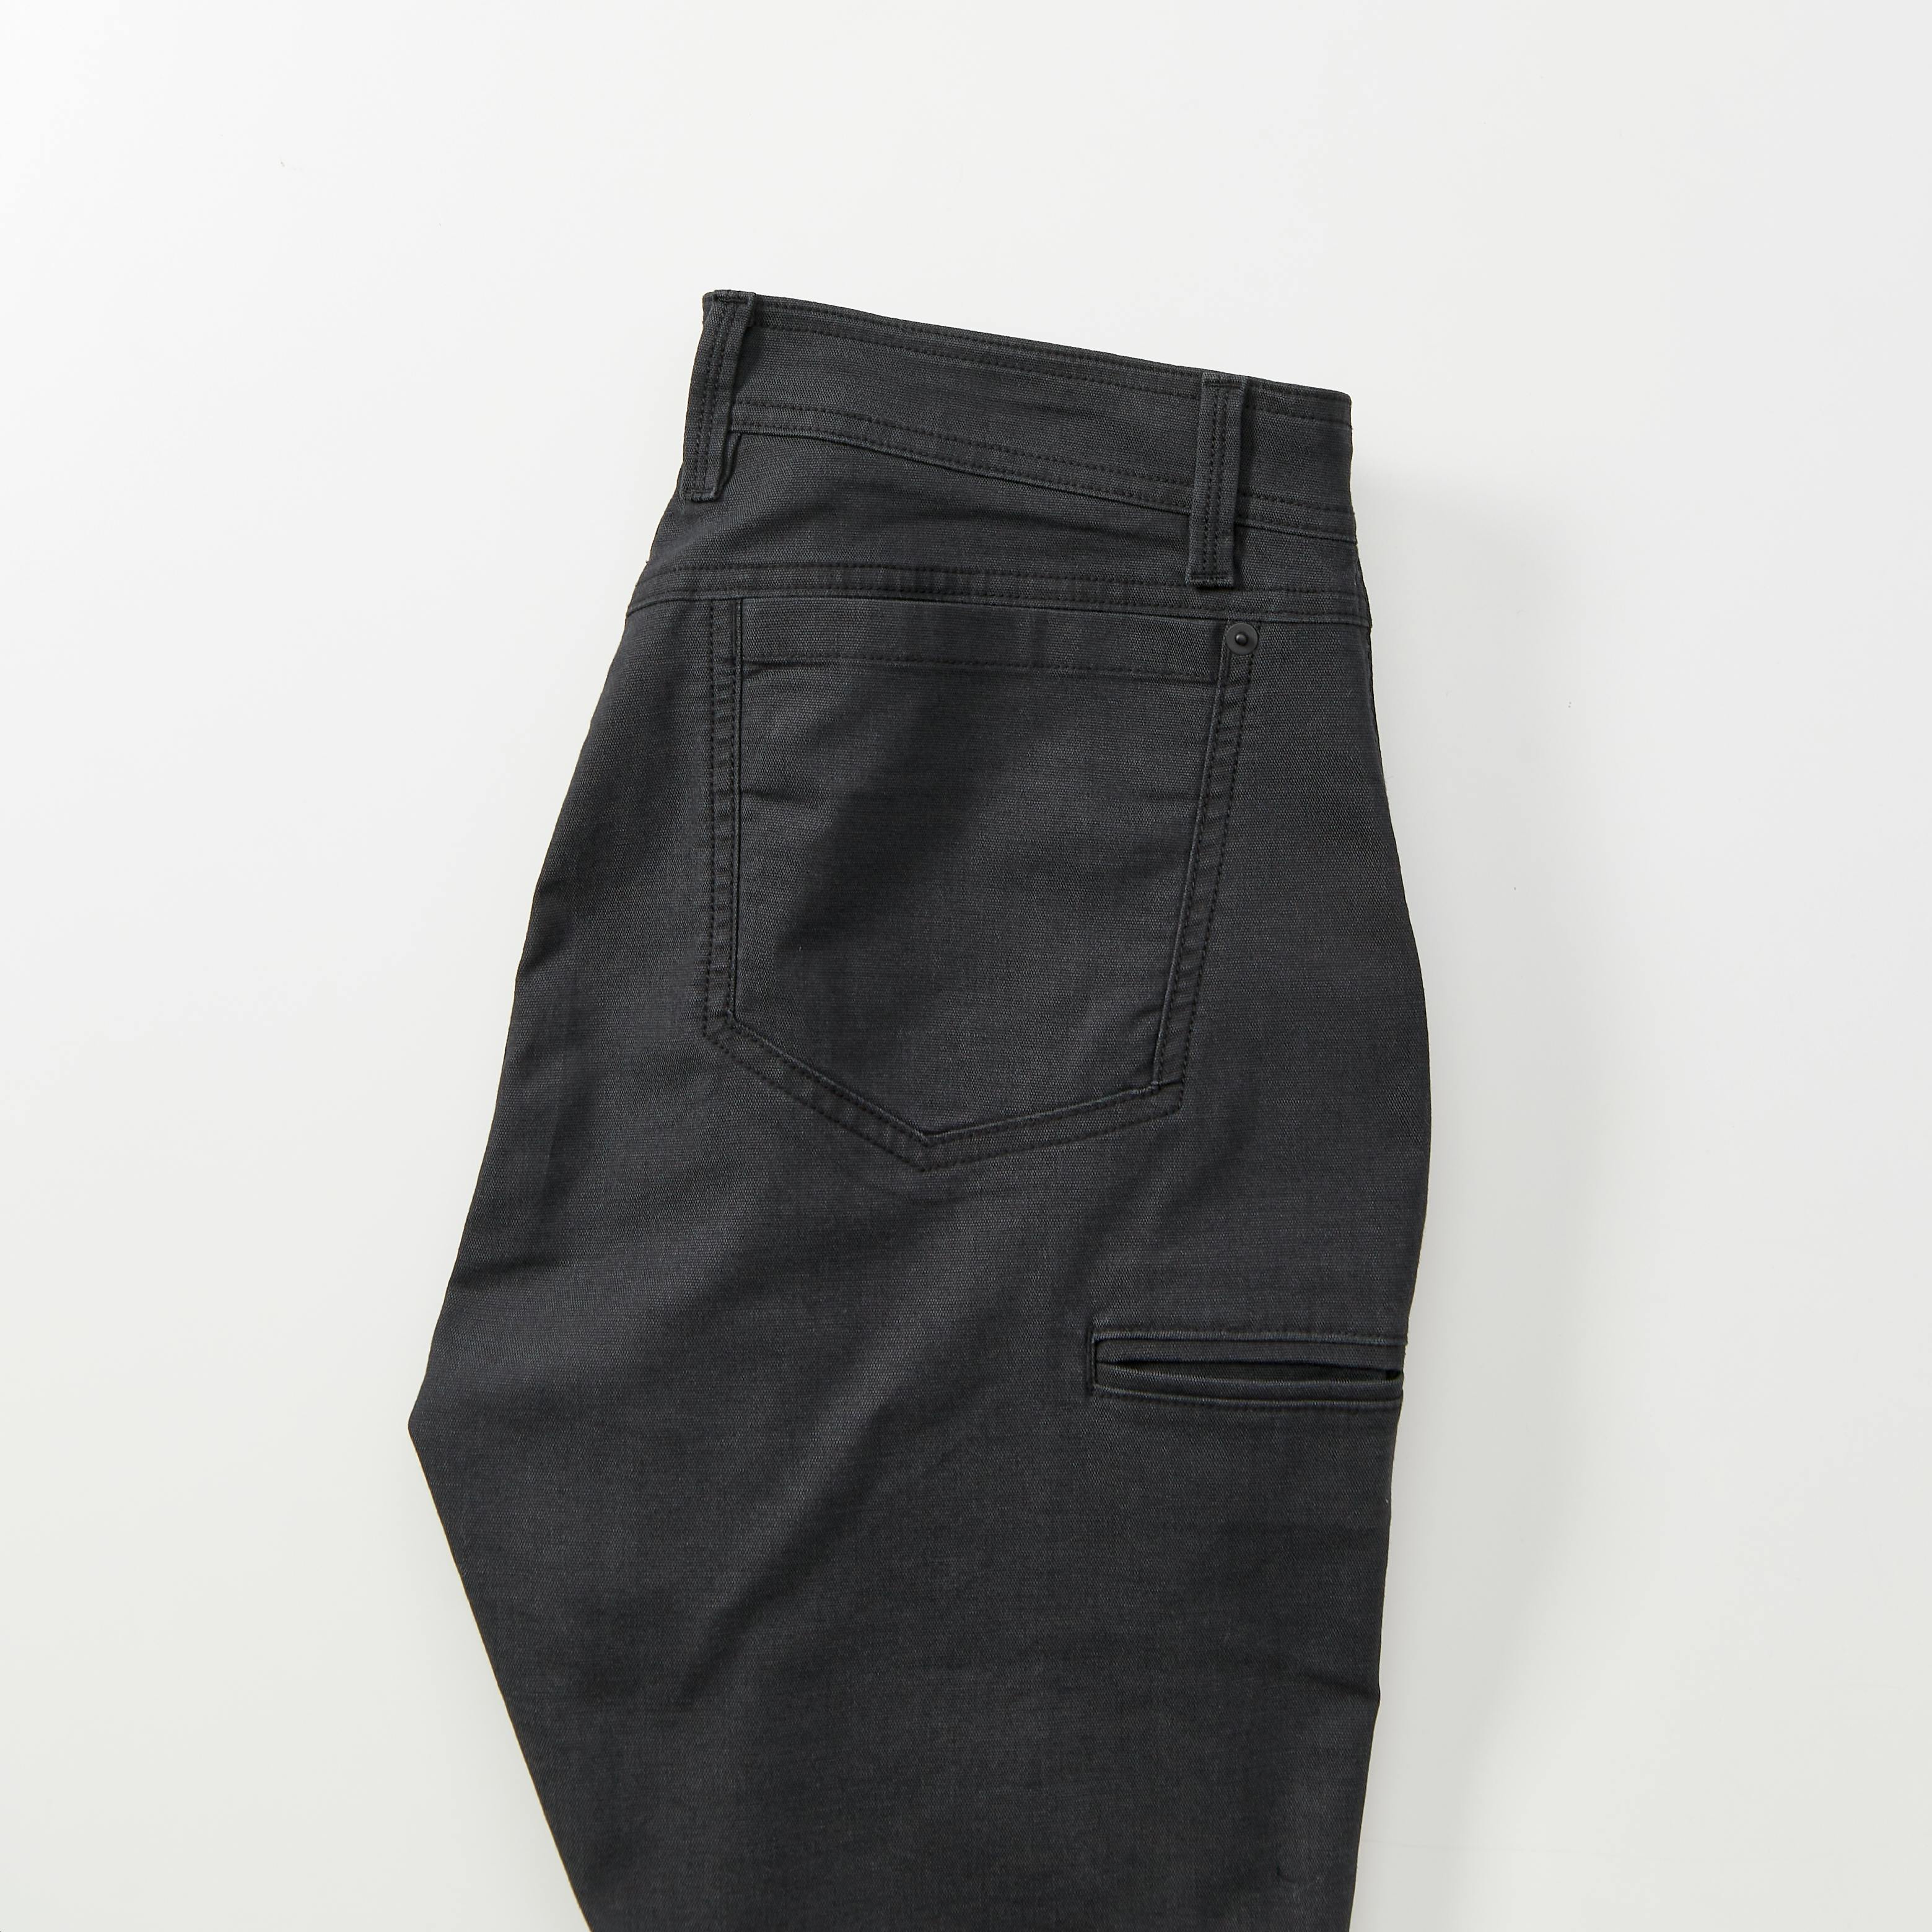 Proof Rover EDC Pant - Slim - Black, Casual Pants